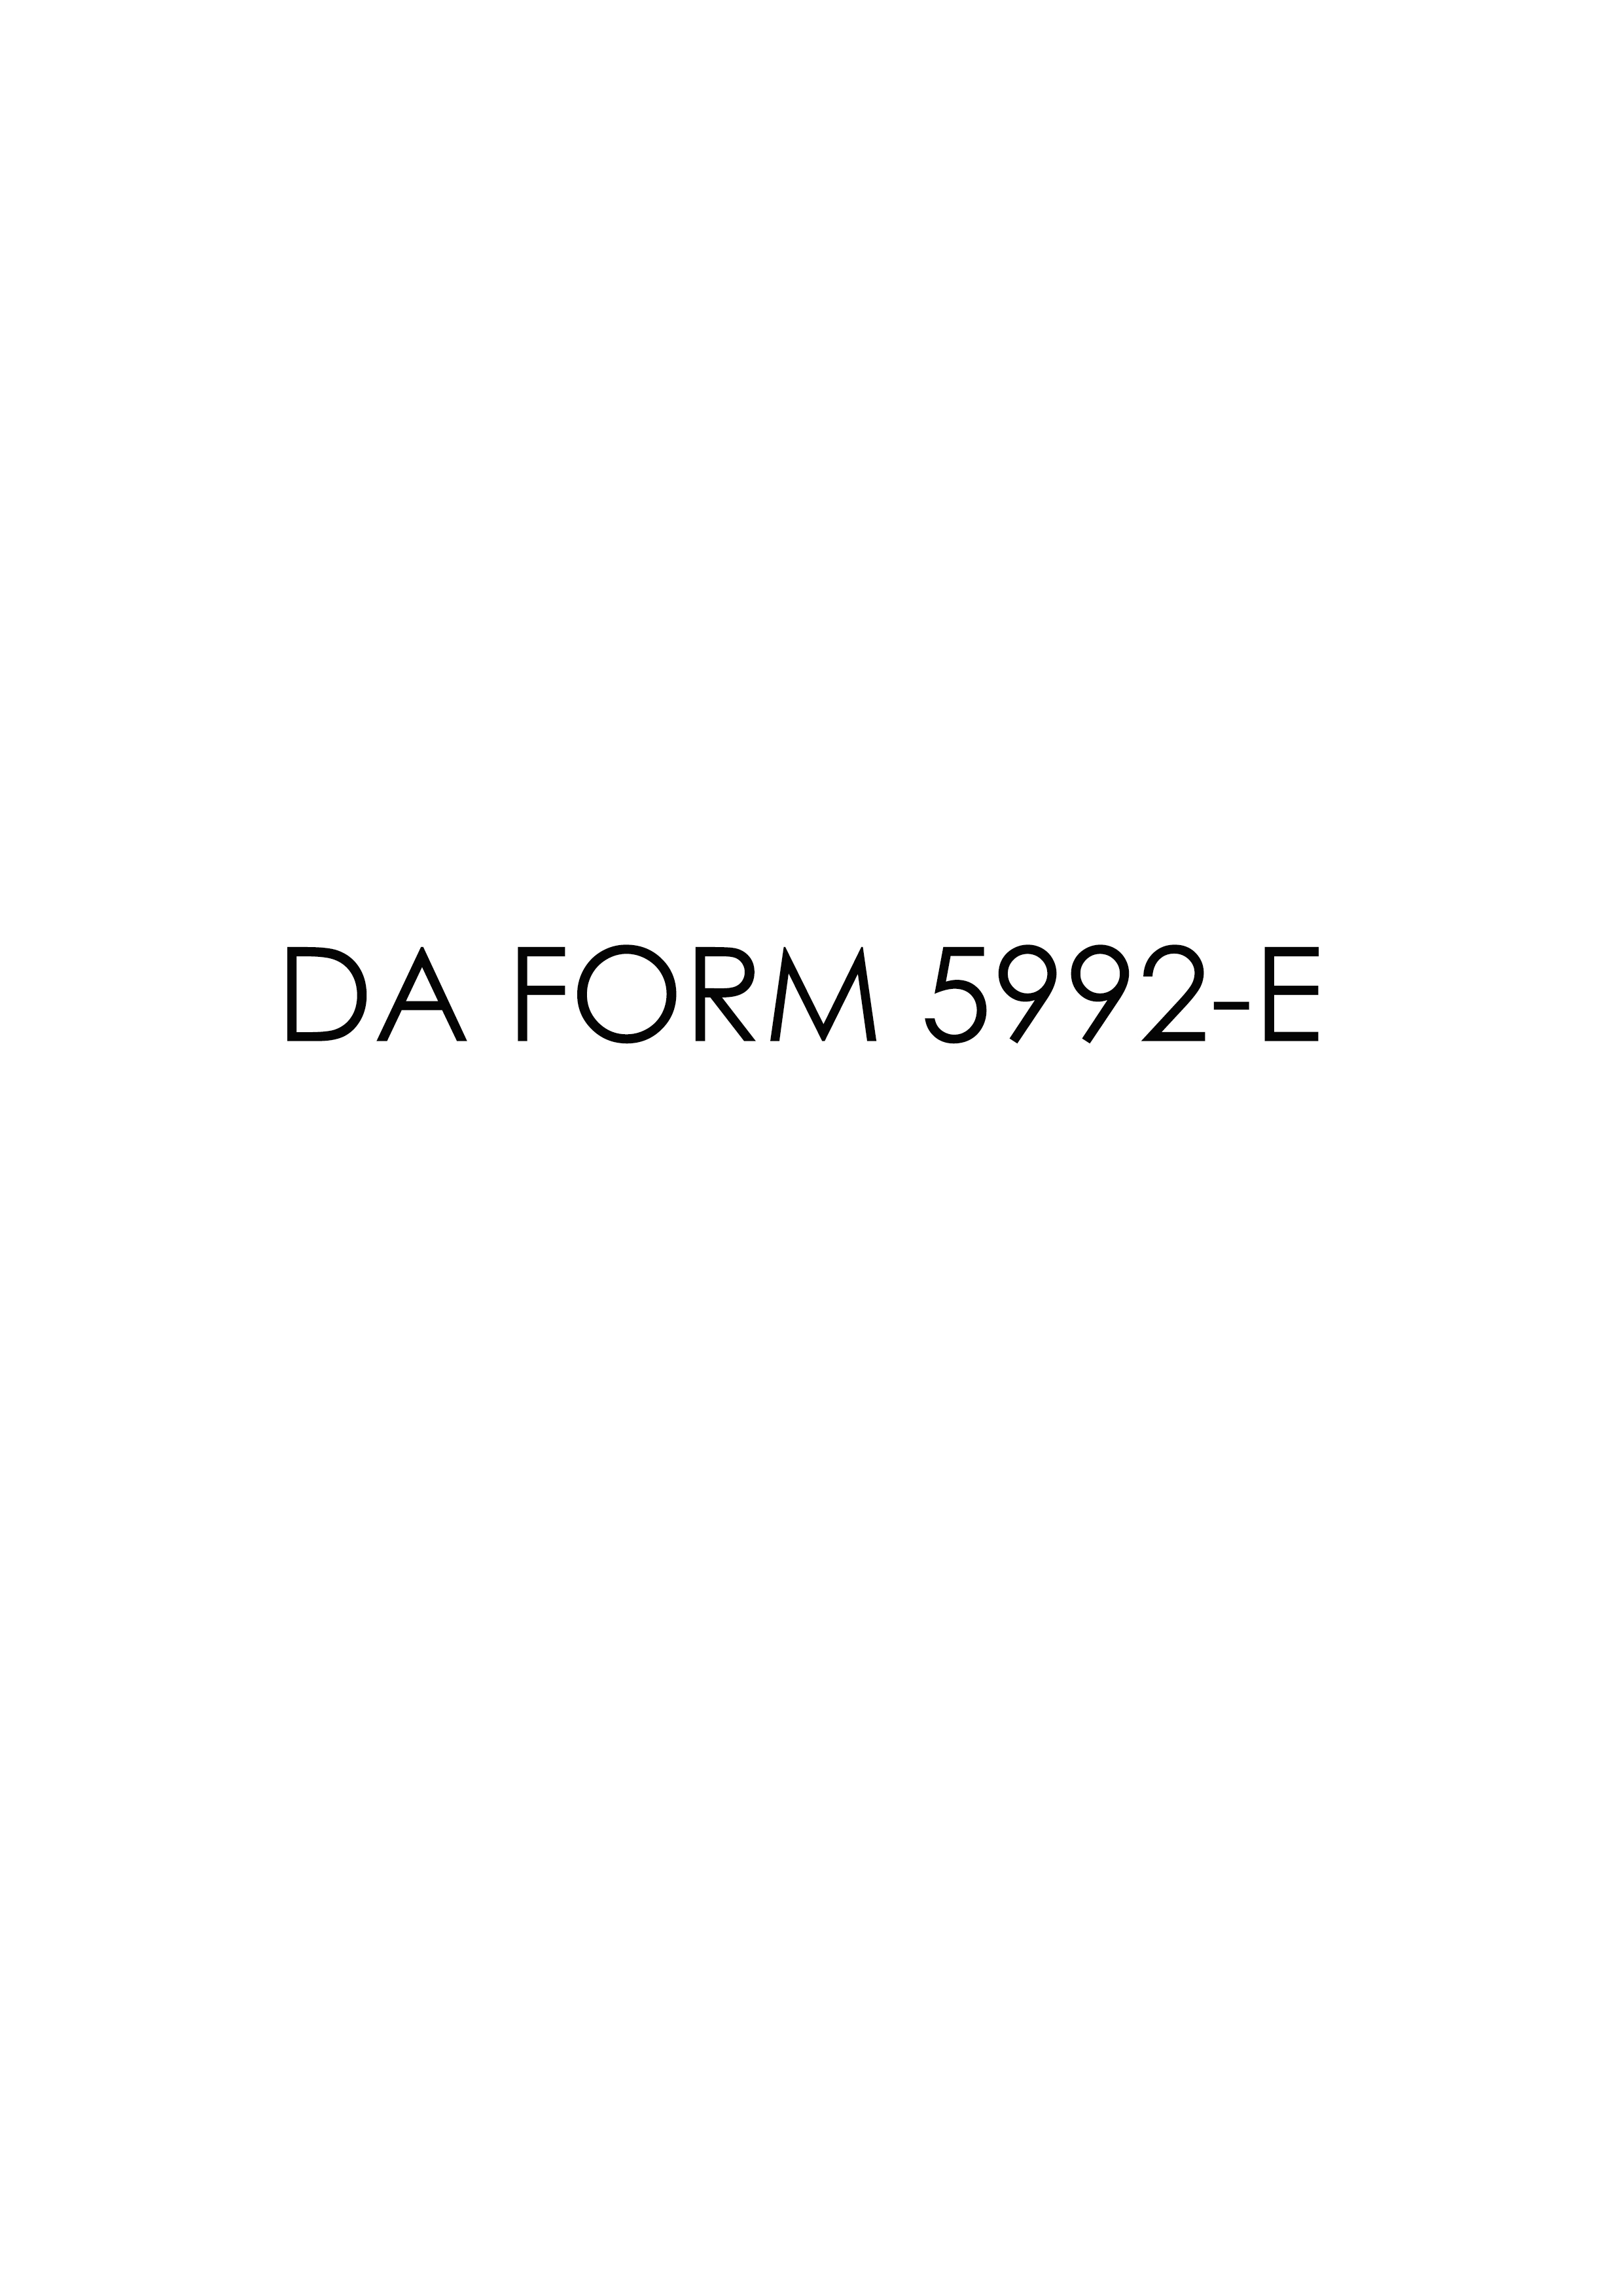 da Form 5992-E fillable